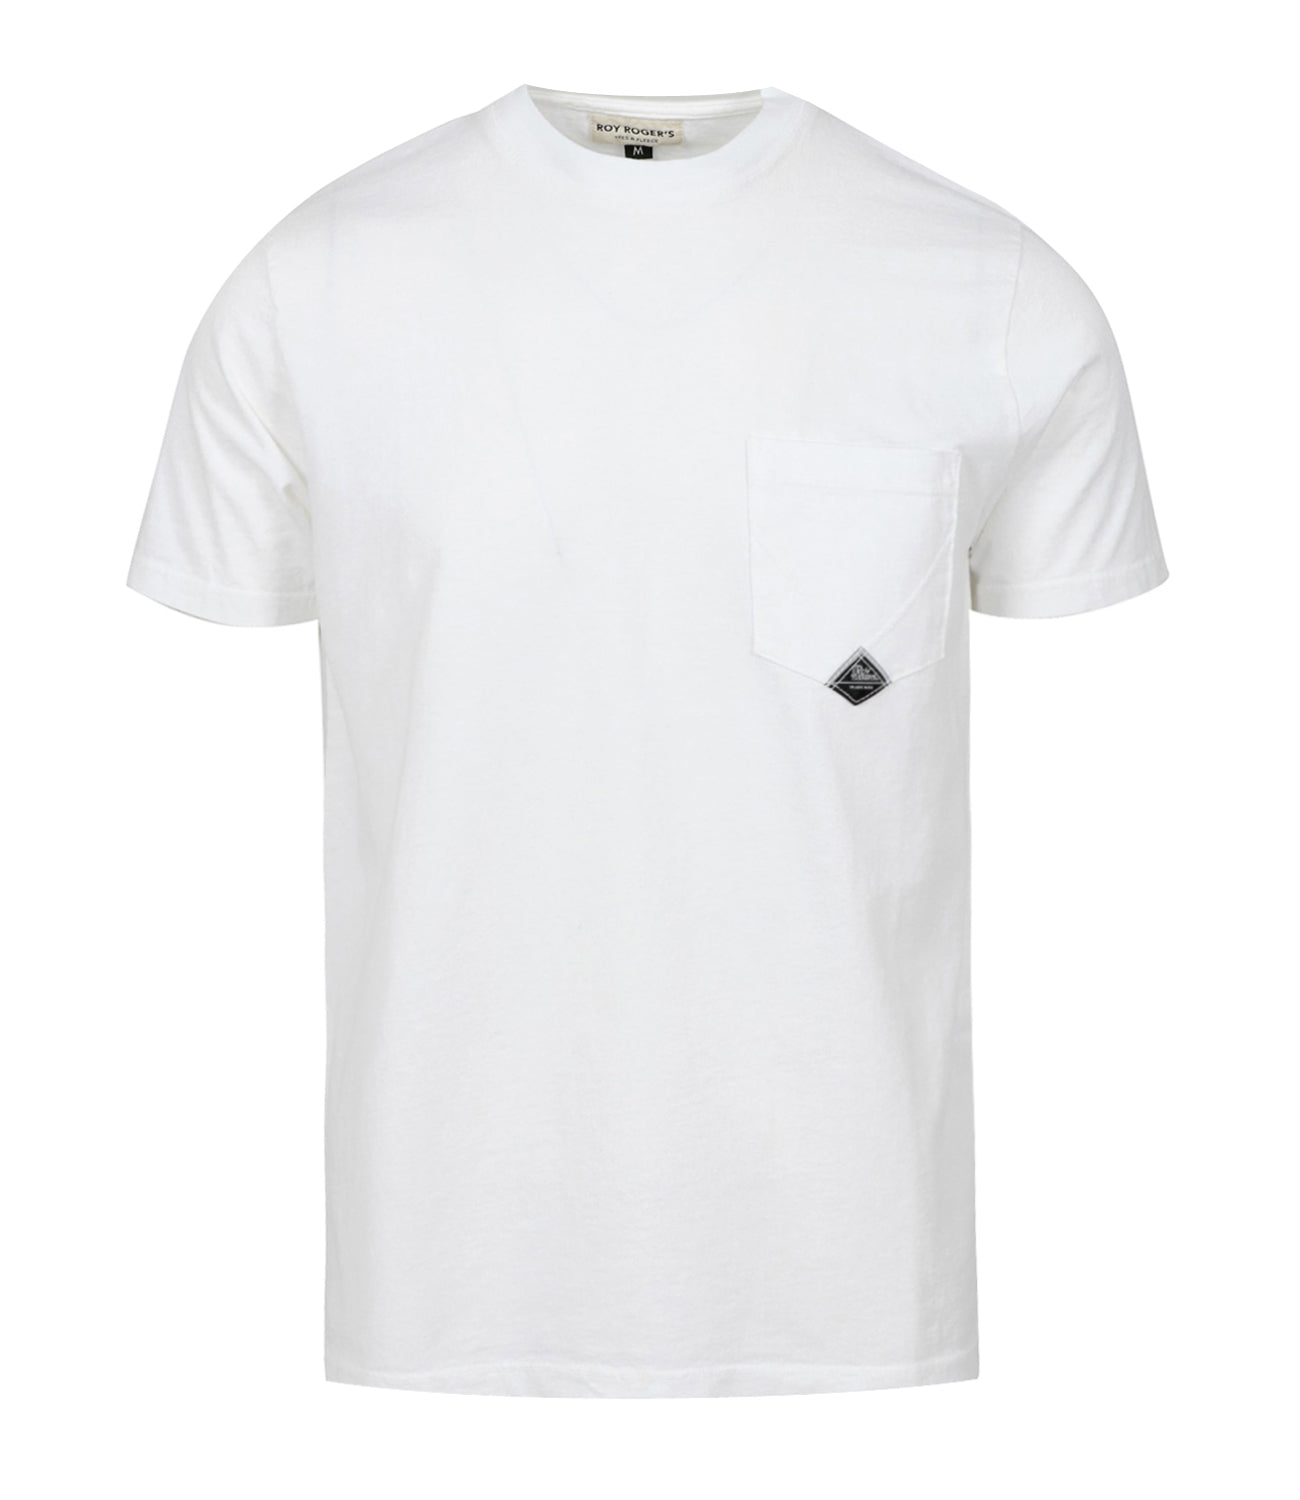 Roy Roger's | T-Shirt Pocket Bianca